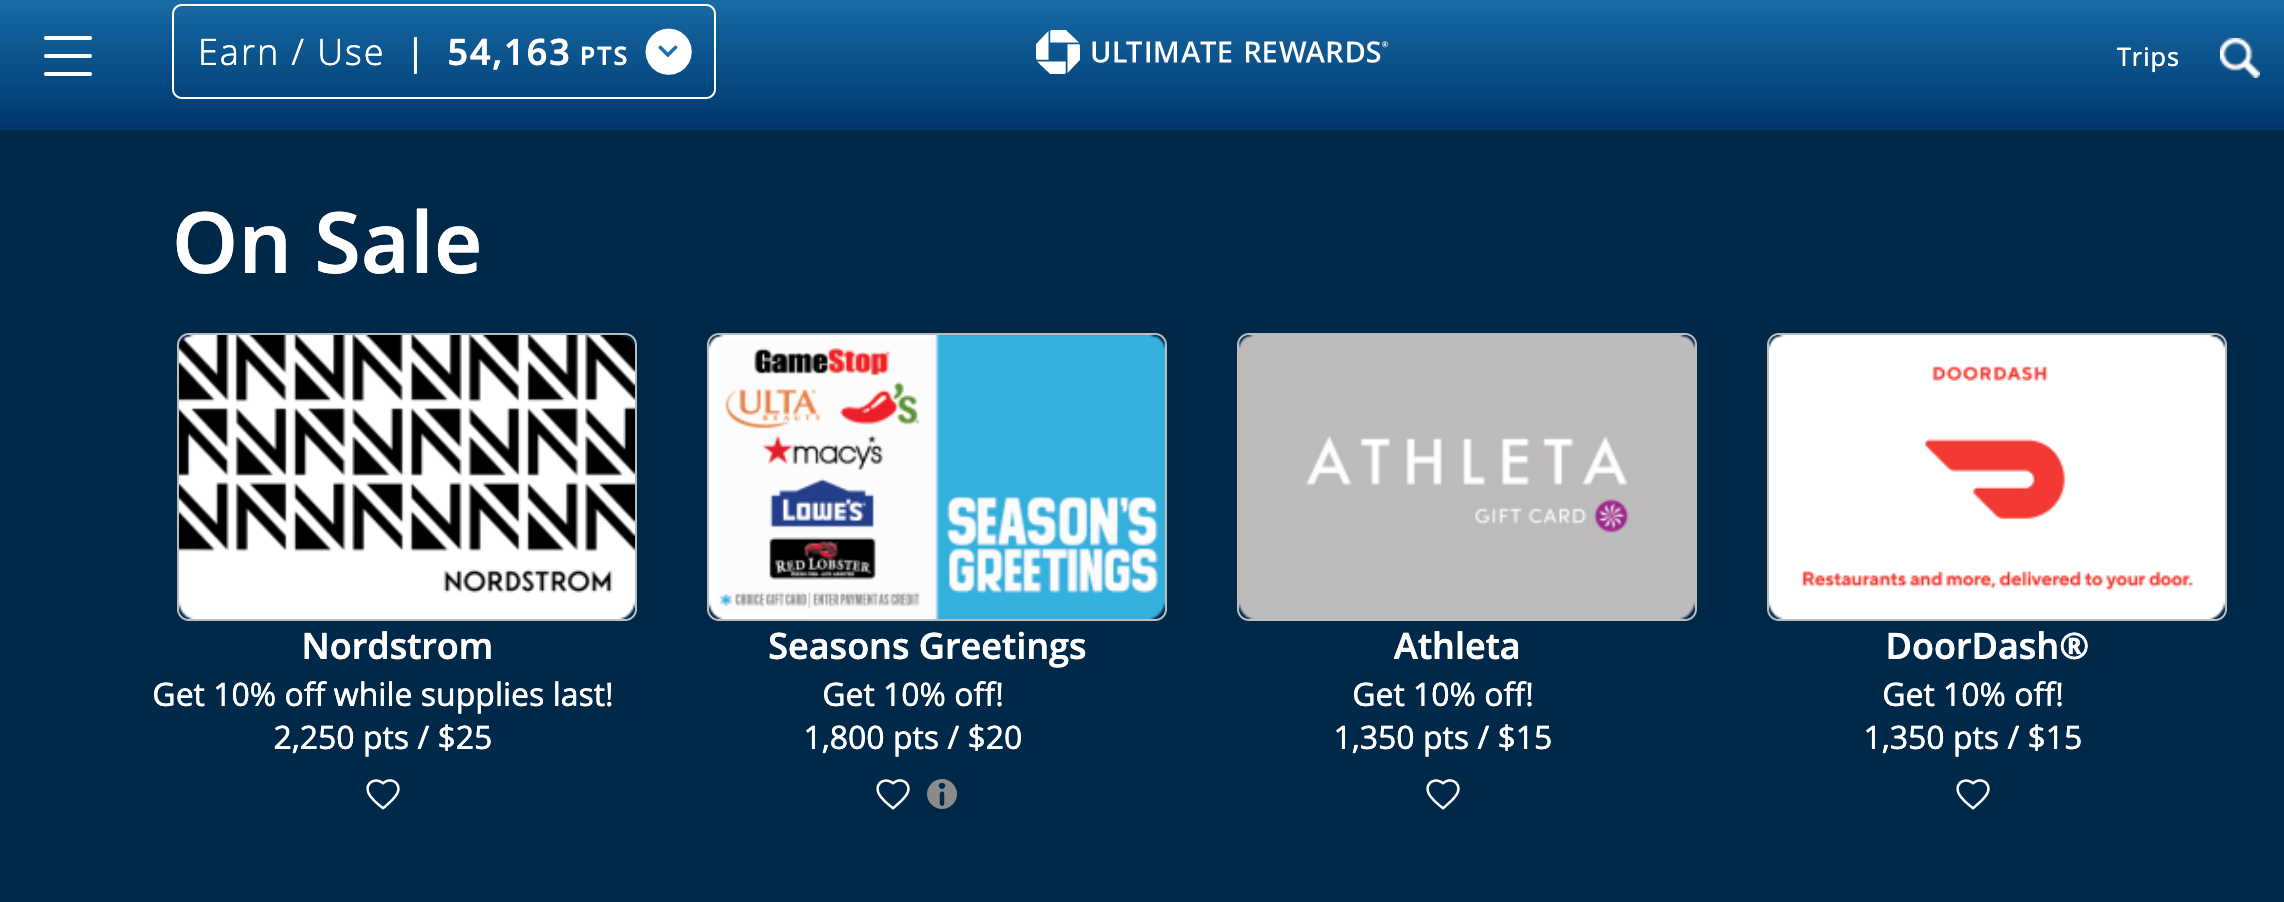 Ultimate Rewards, Credit Cards